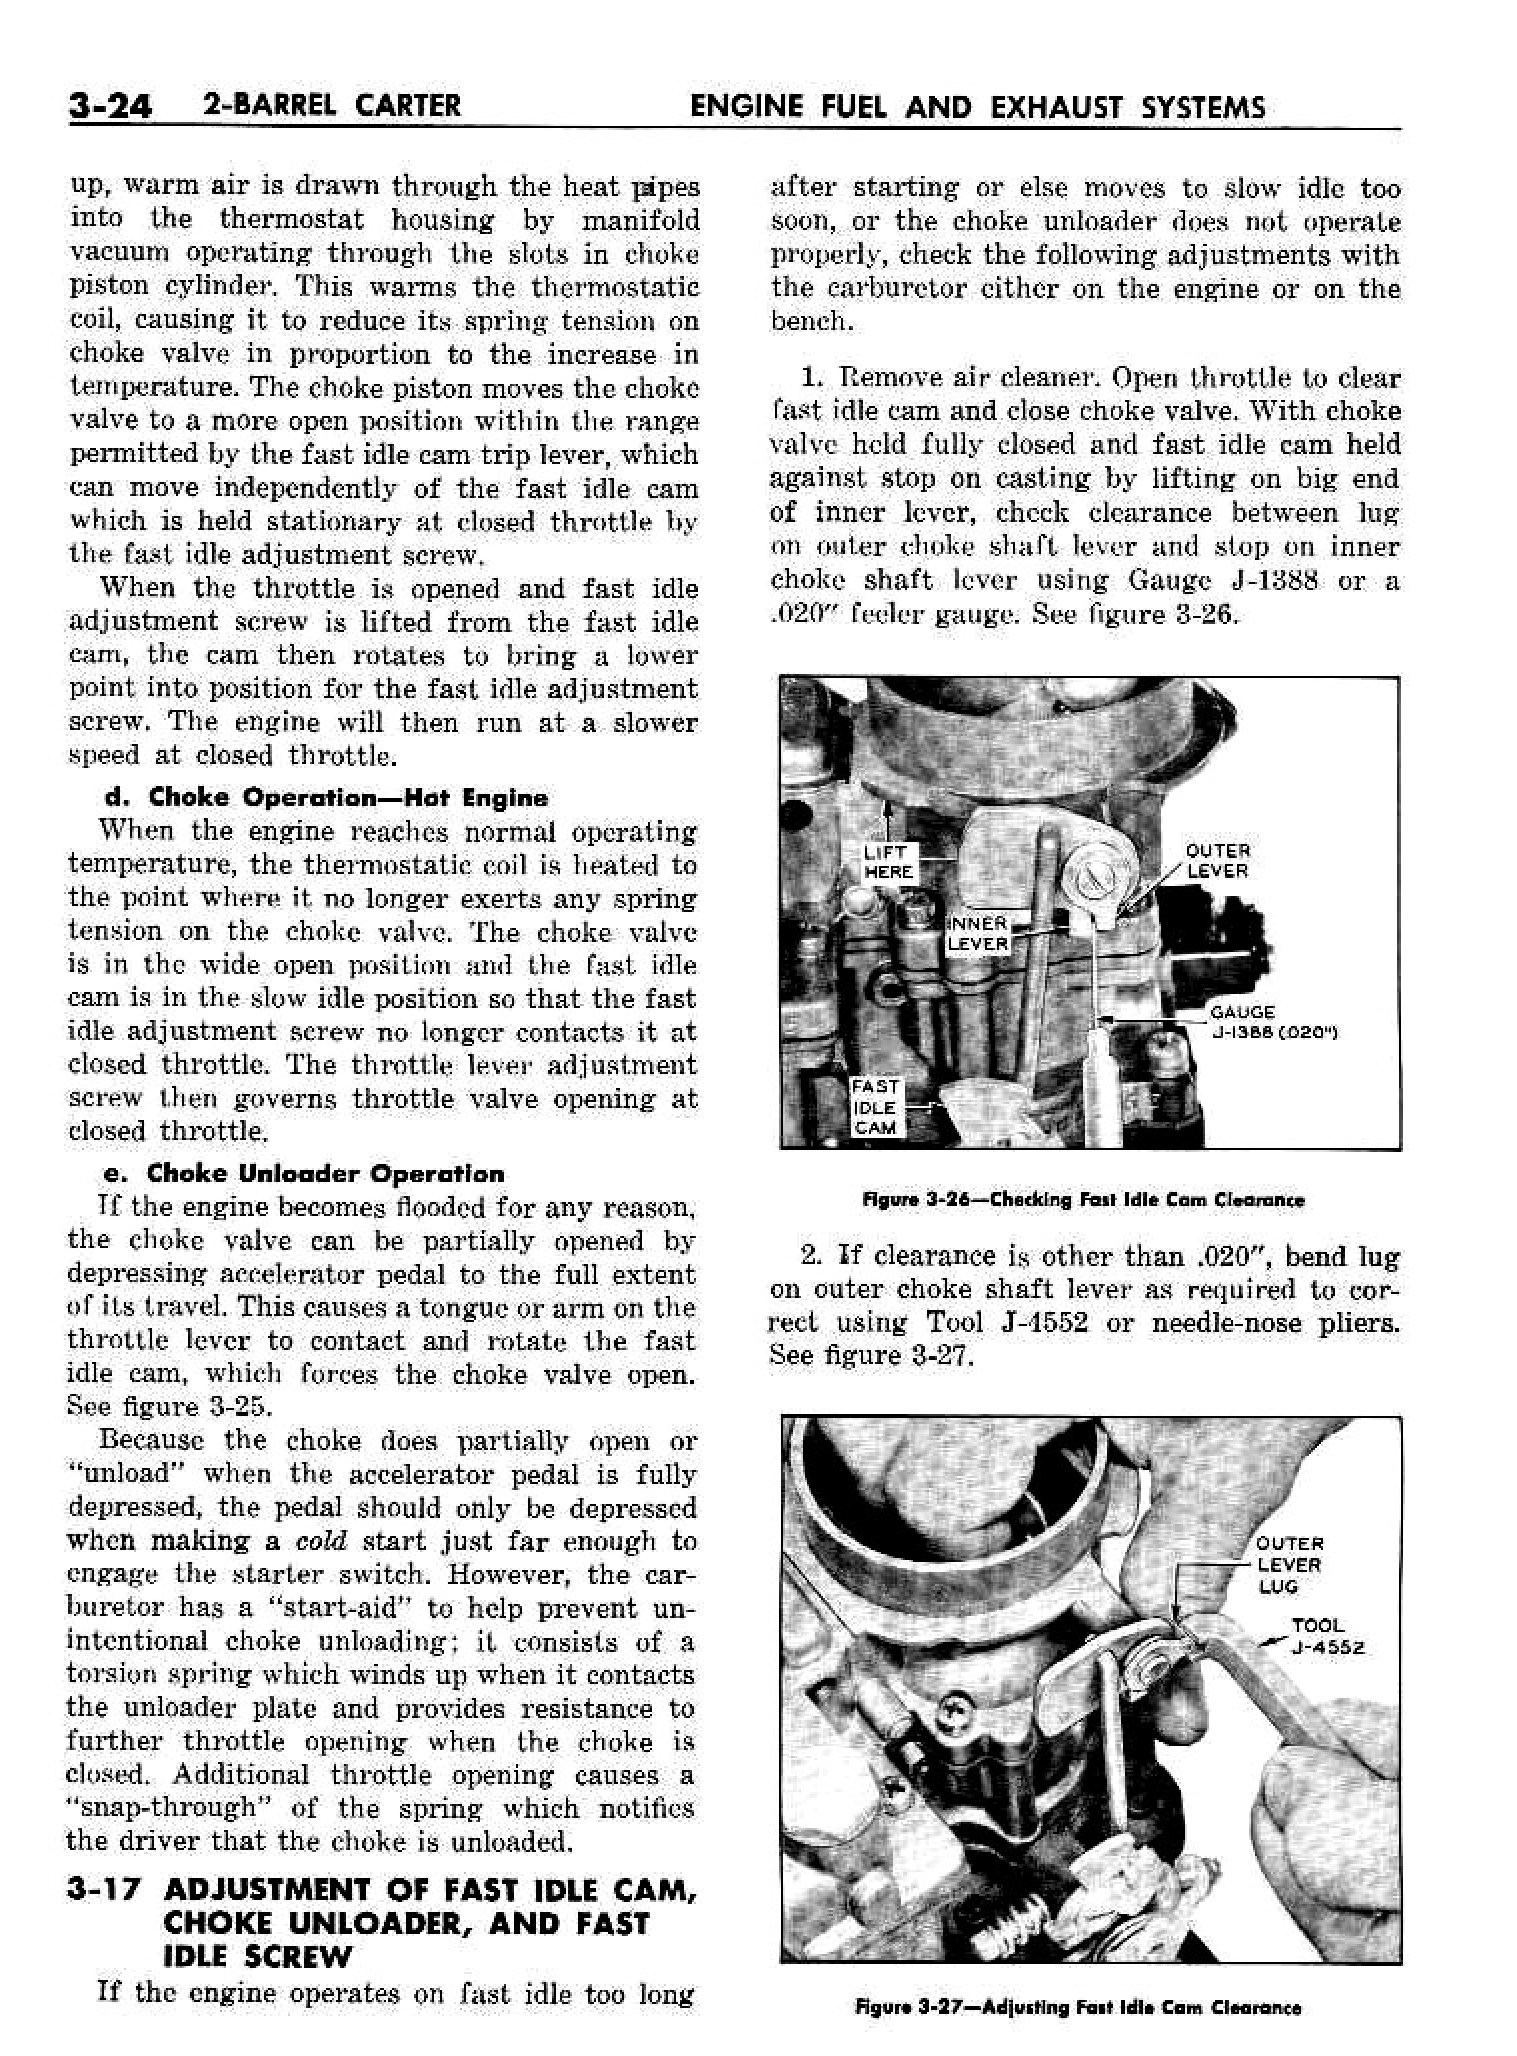 n_04 1958 Buick Shop Manual - Engine Fuel & Exhaust_24.jpg